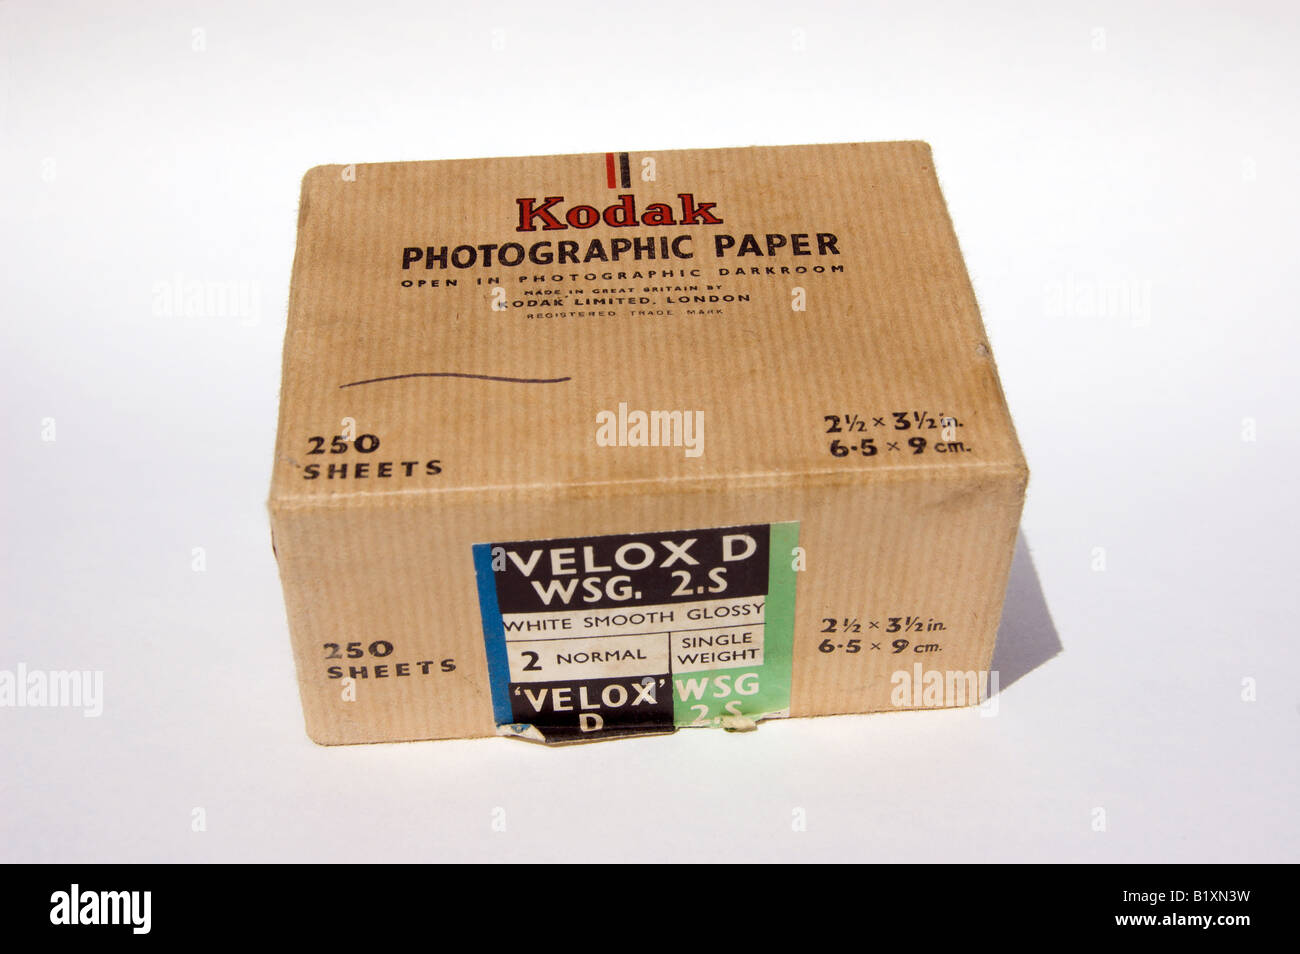 Kodak Fotopapier Box Stockfoto